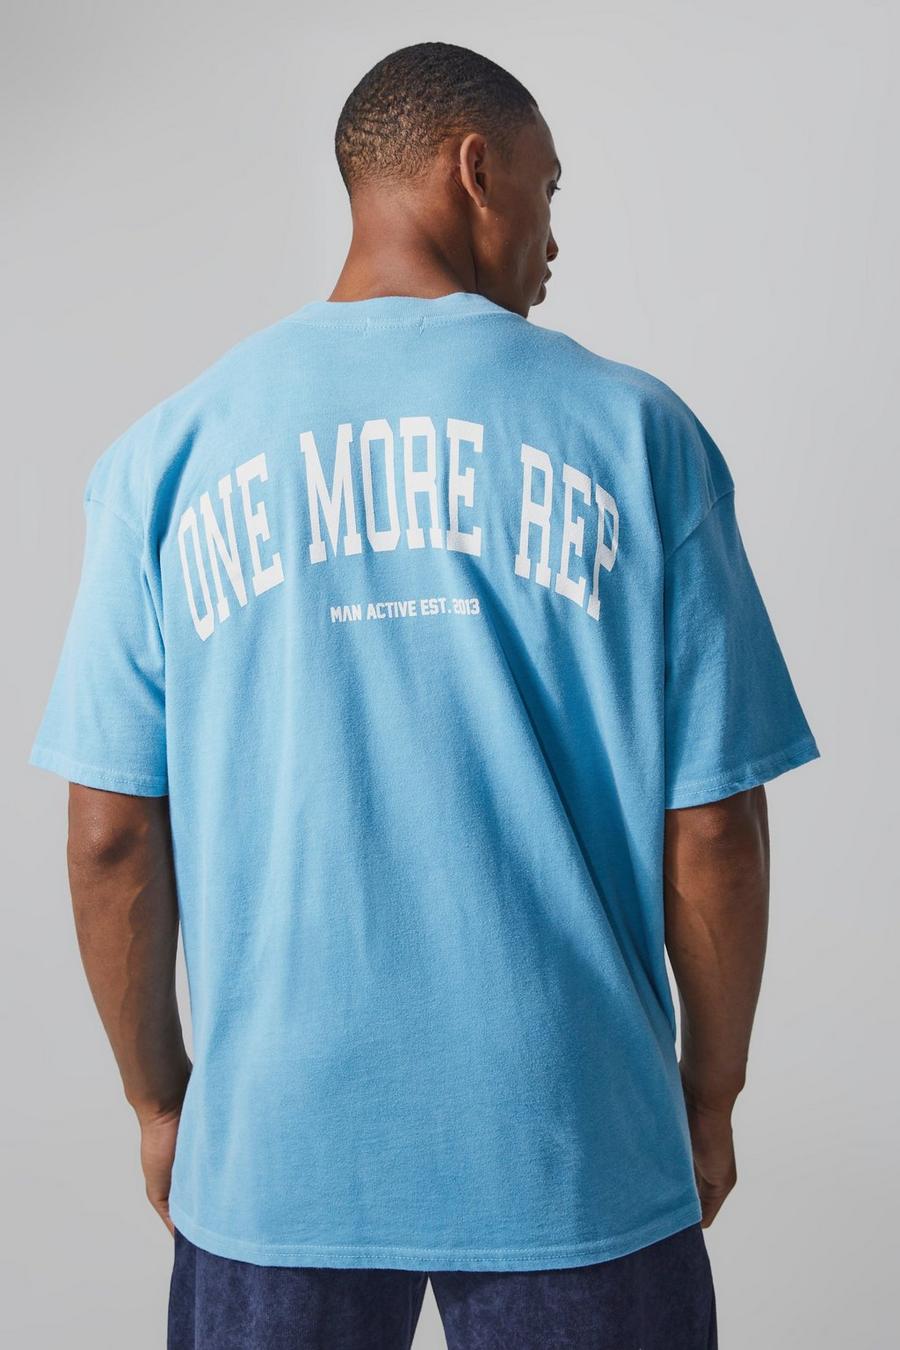 Teal Man Active Oversized Overdye Rep T-shirt